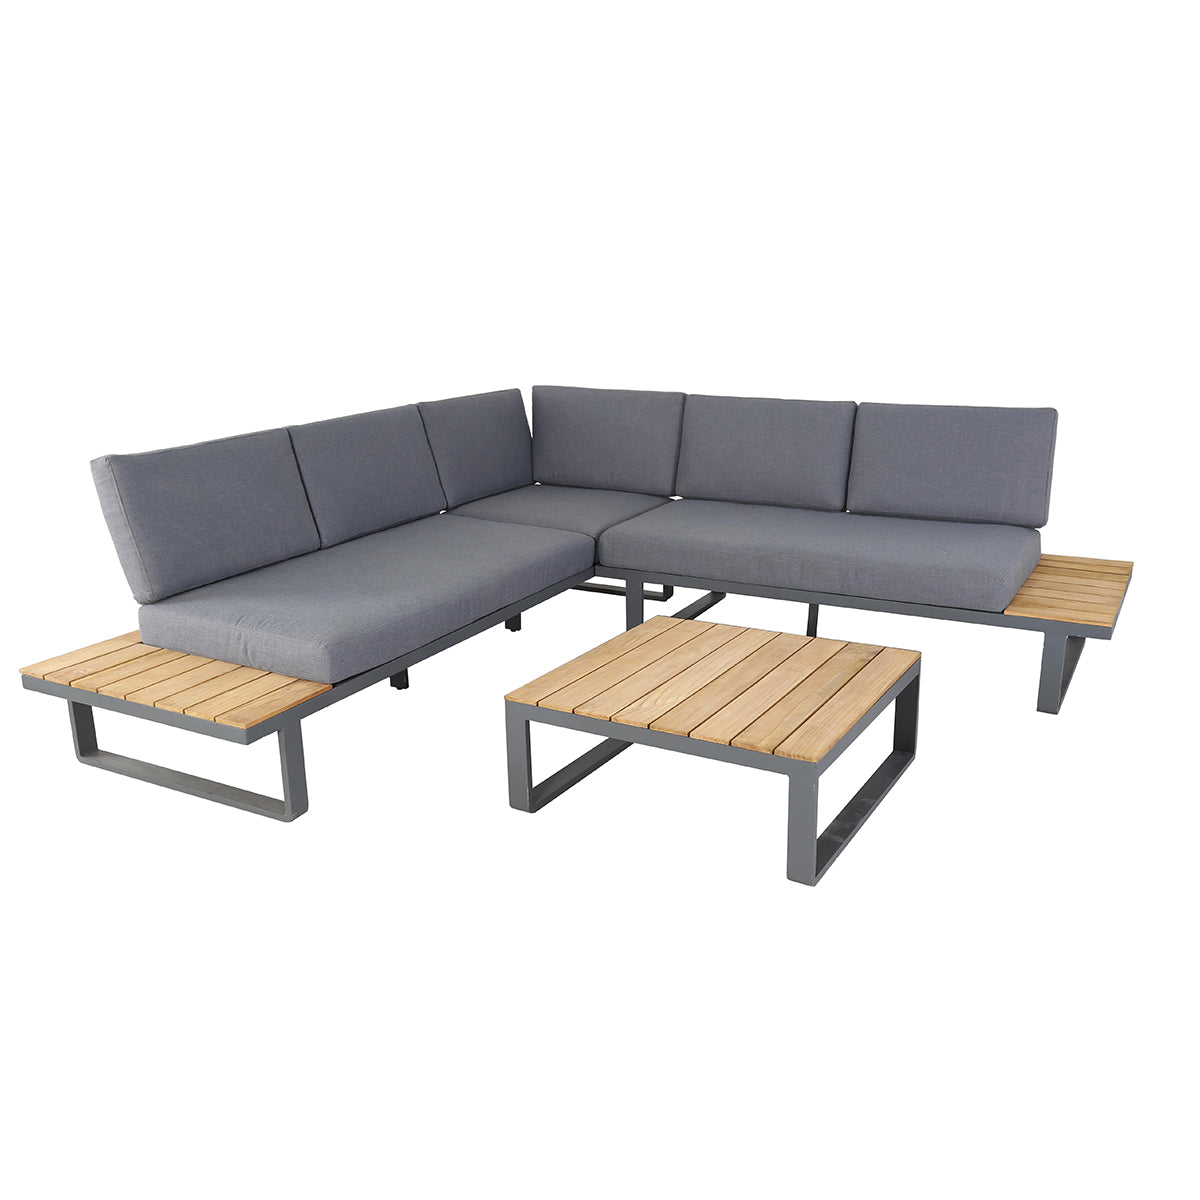 Vooruit Aanbod bijwoord INDIANA 5-seater gray aluminum and polywood low garden furniture set -  REDDECO.COM